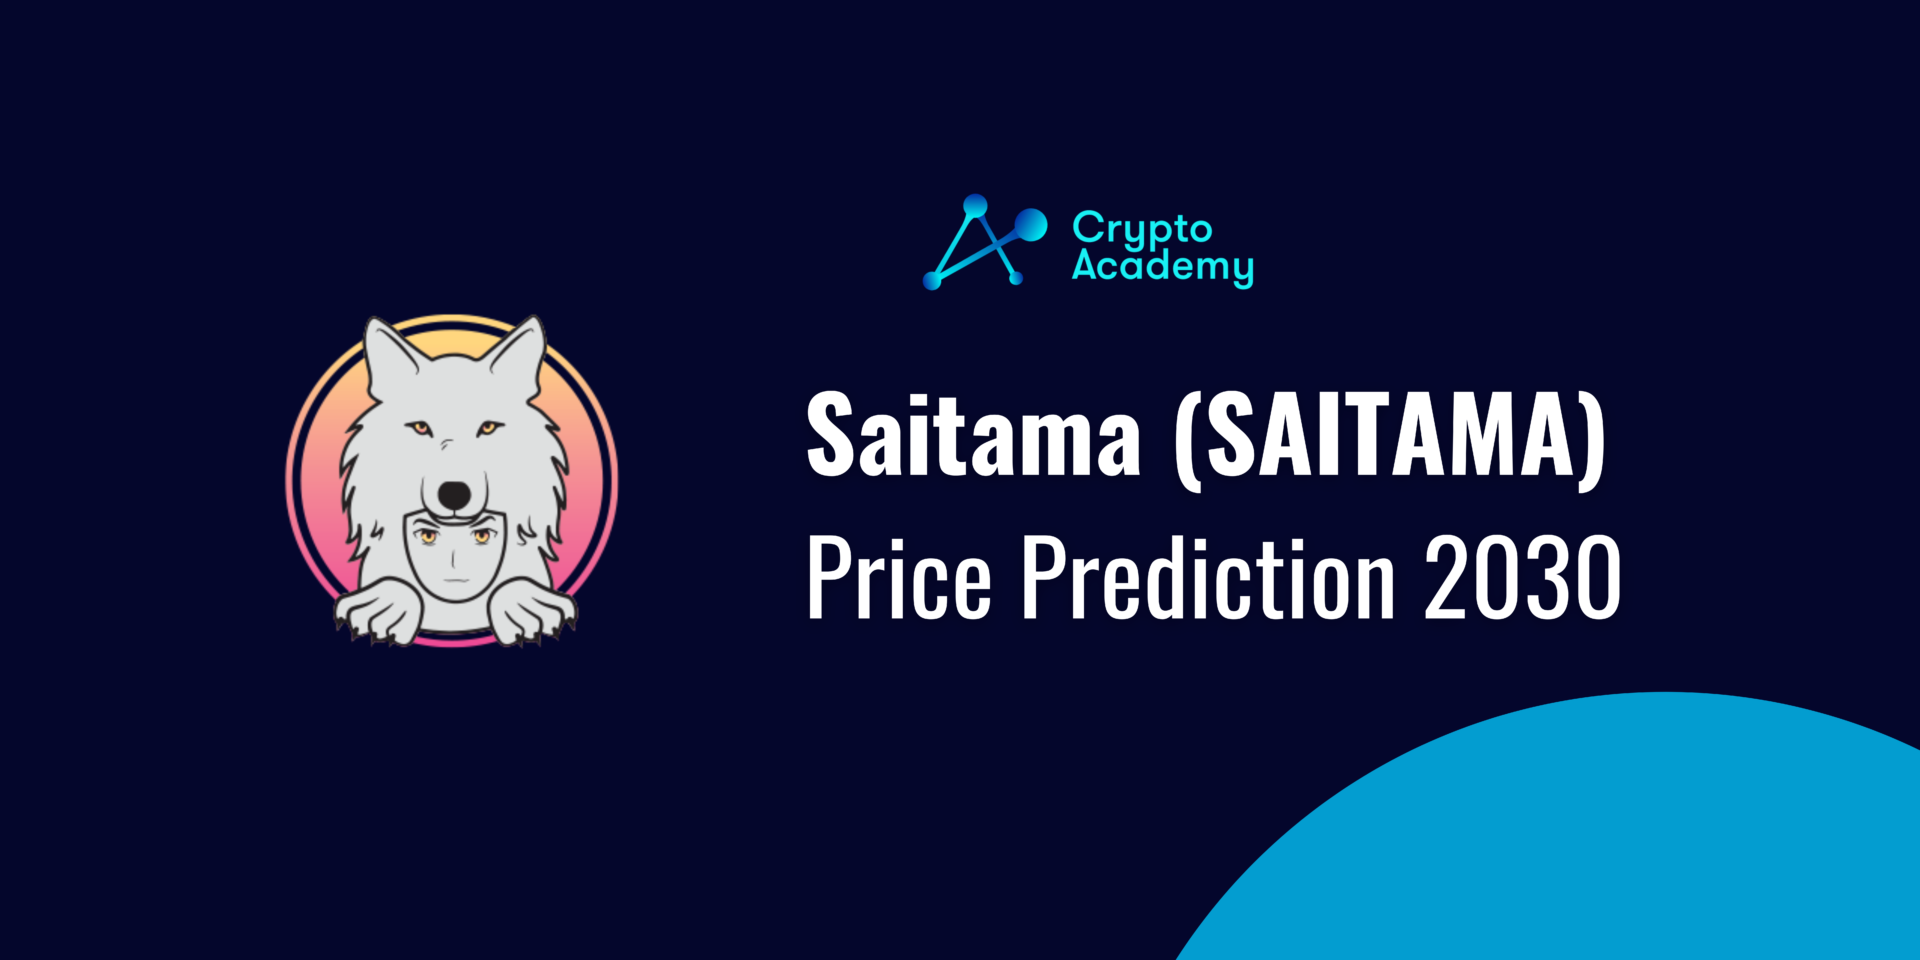 Saitama Inu Price Prediction 2030 - What Will SAITAMA Price be in 2030?